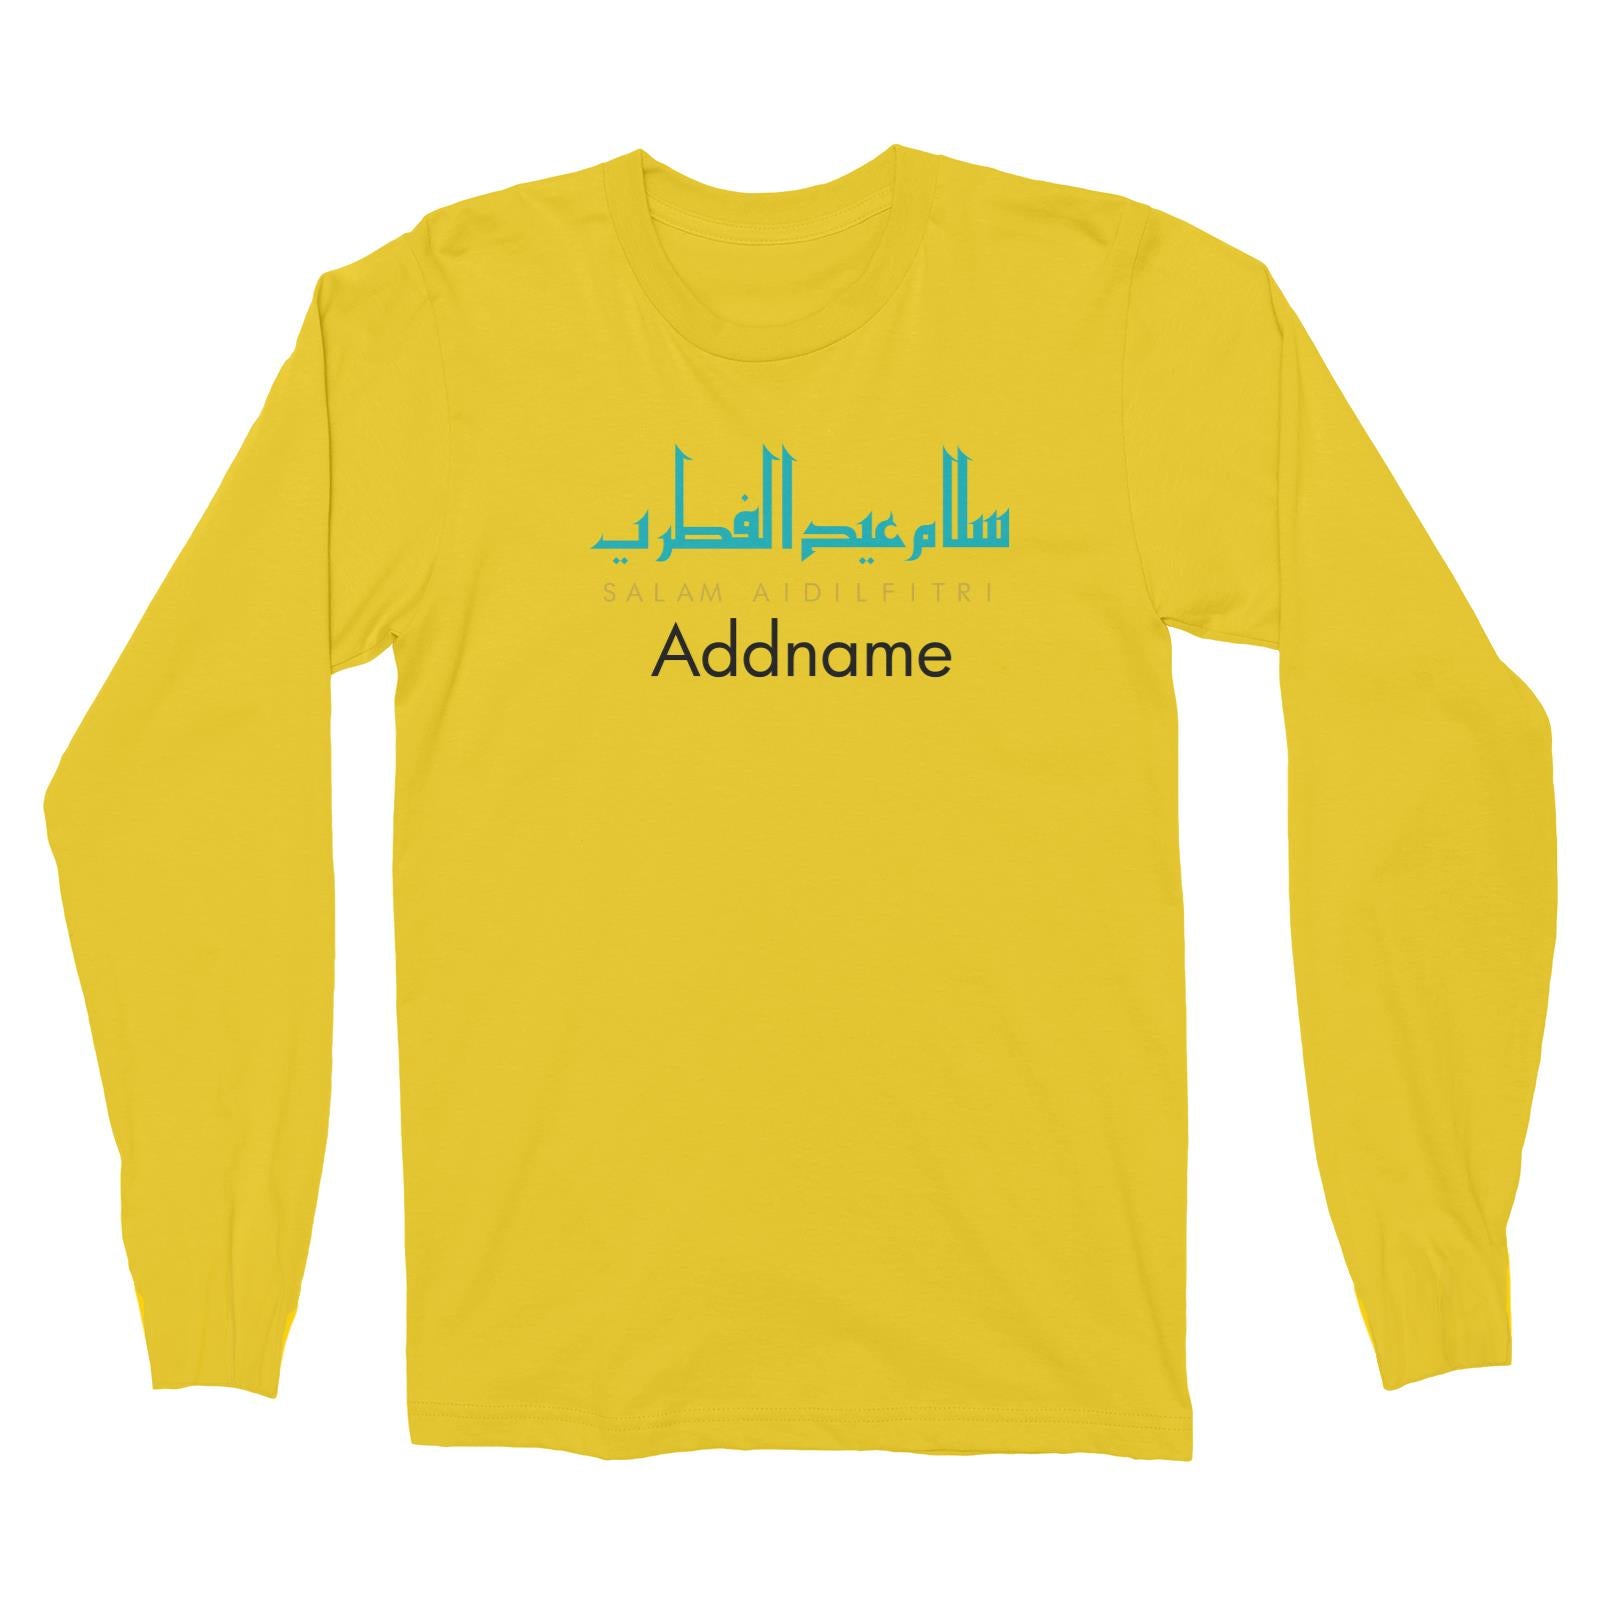 Salam Aidilfitri Jawi Typography T-Shirt